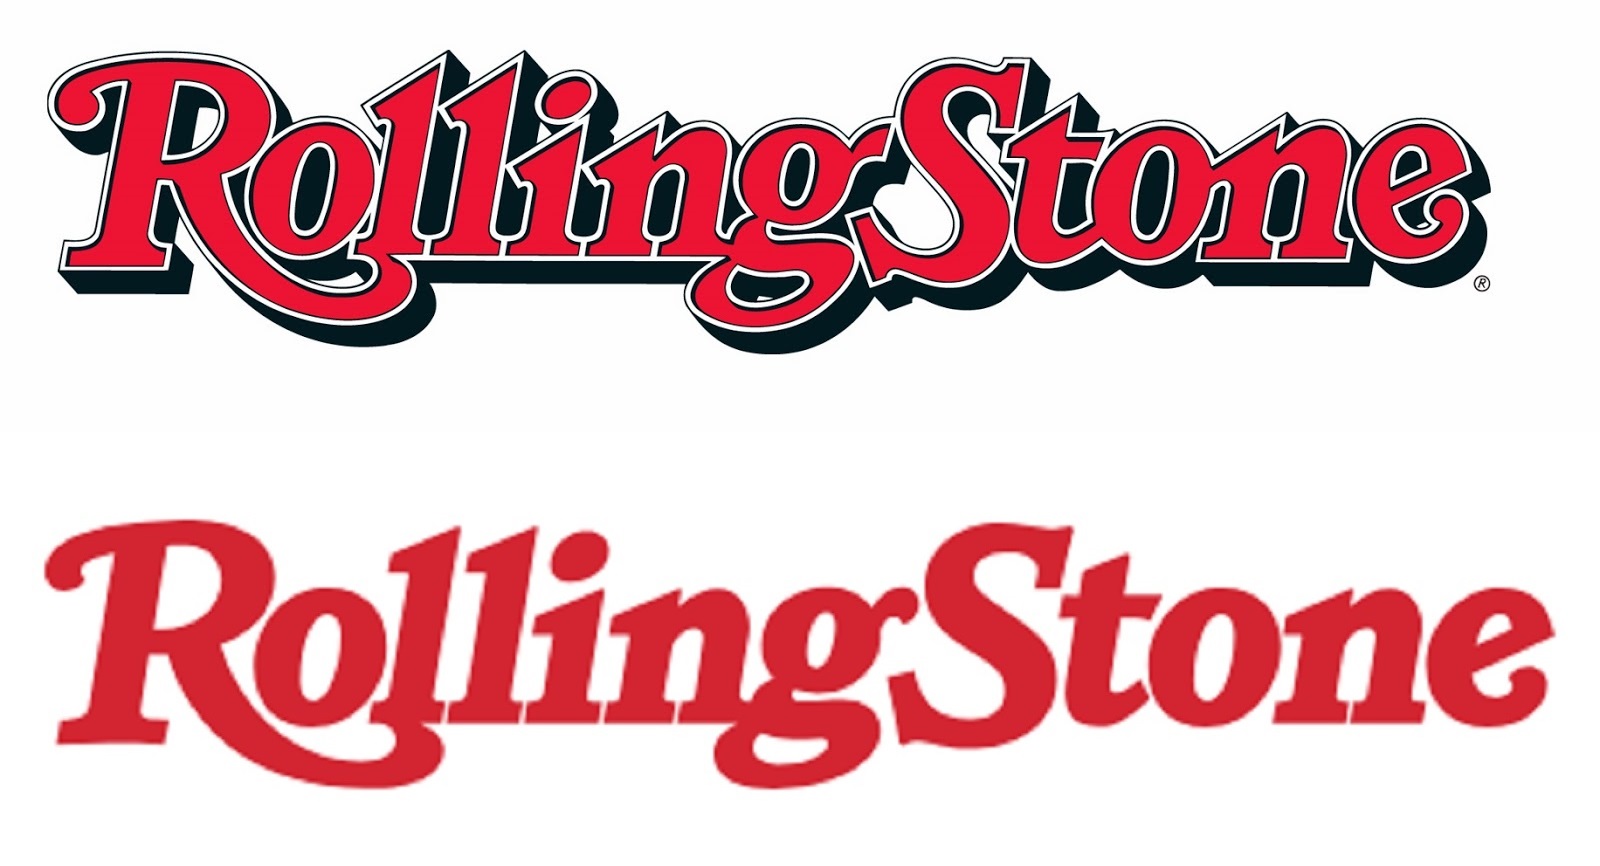 Rolling Stone magazine logo redesign | Tarek Chemaly